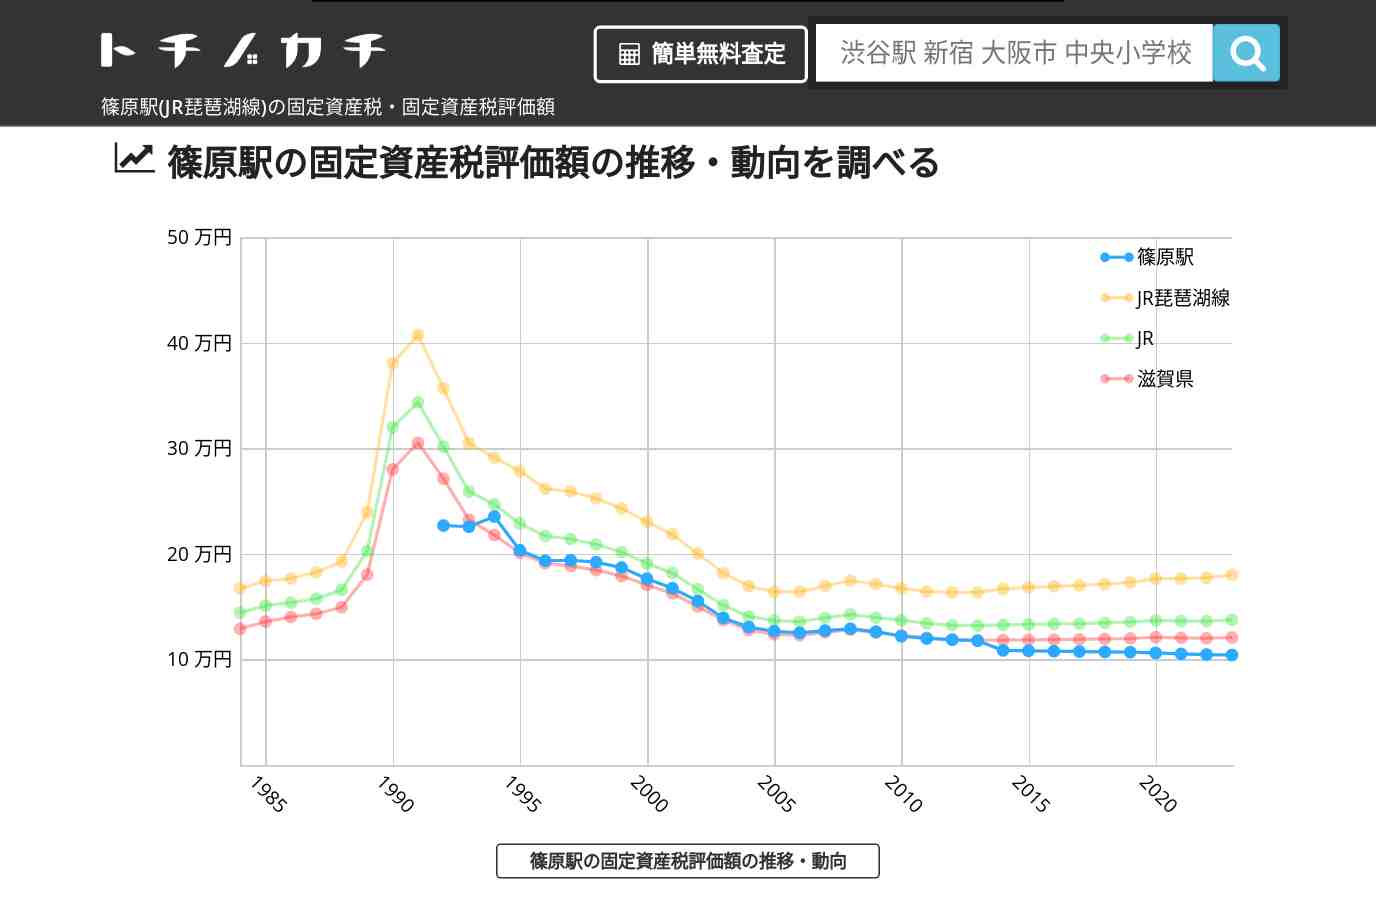 篠原駅(JR琵琶湖線)の固定資産税・固定資産税評価額 | トチノカチ